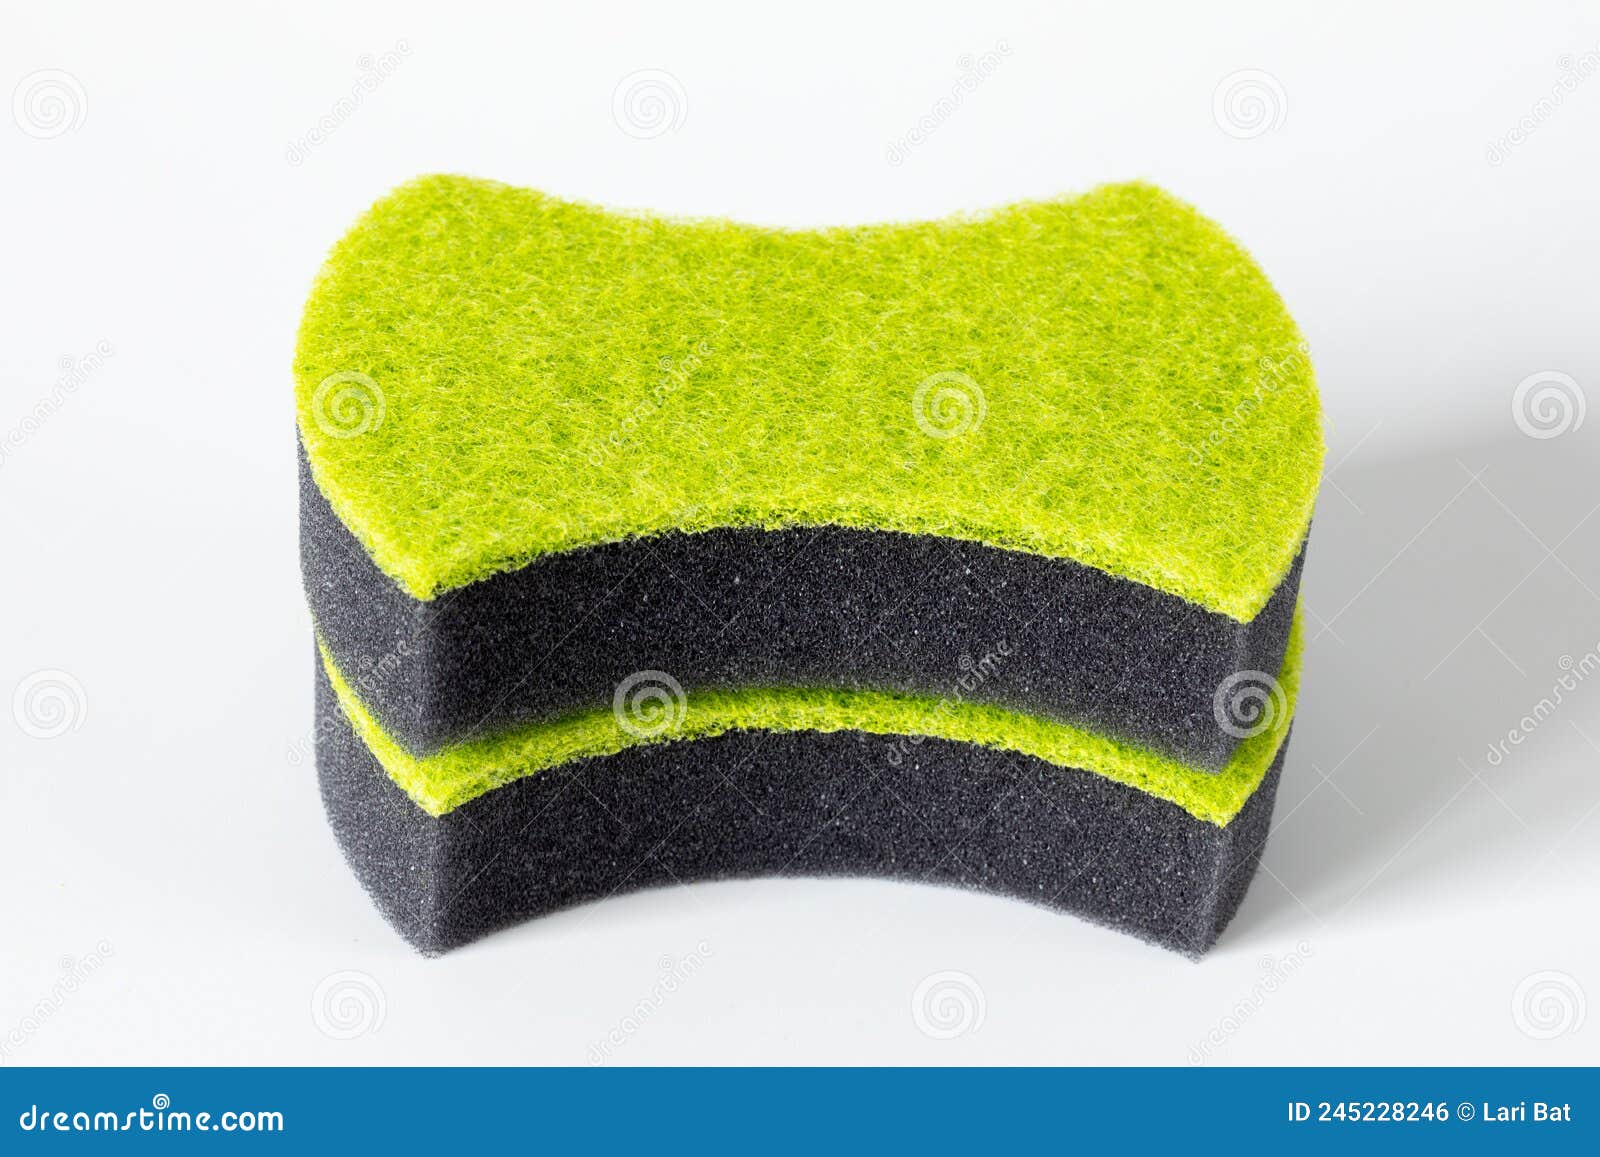 Black Sponges